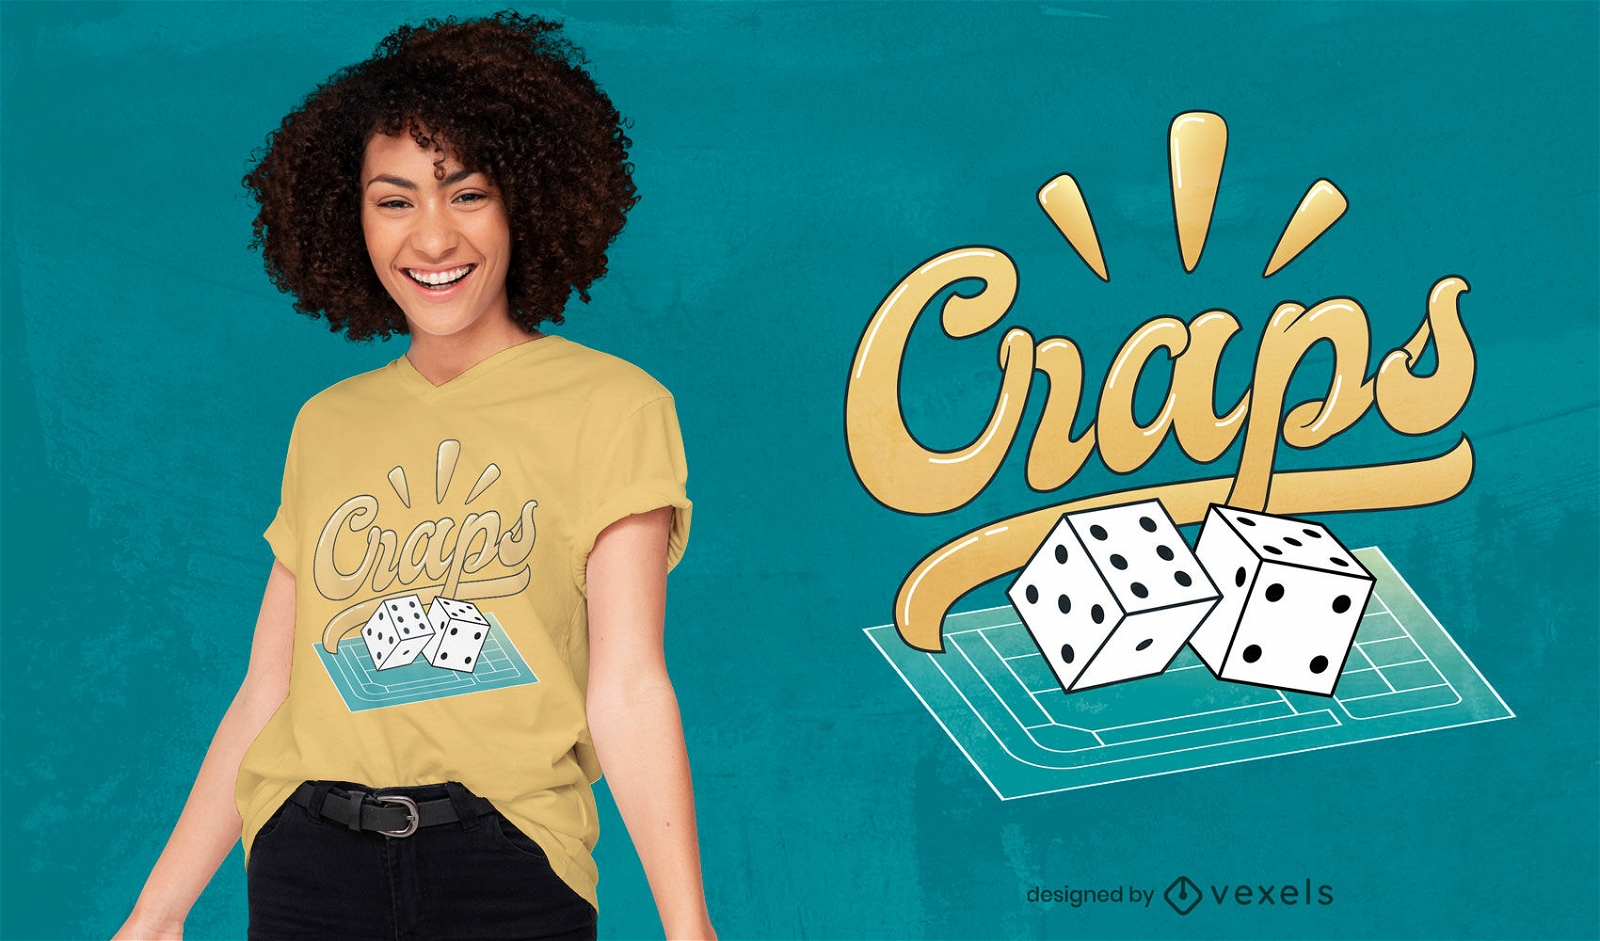 Craps-Spiel-T-Shirt-Design